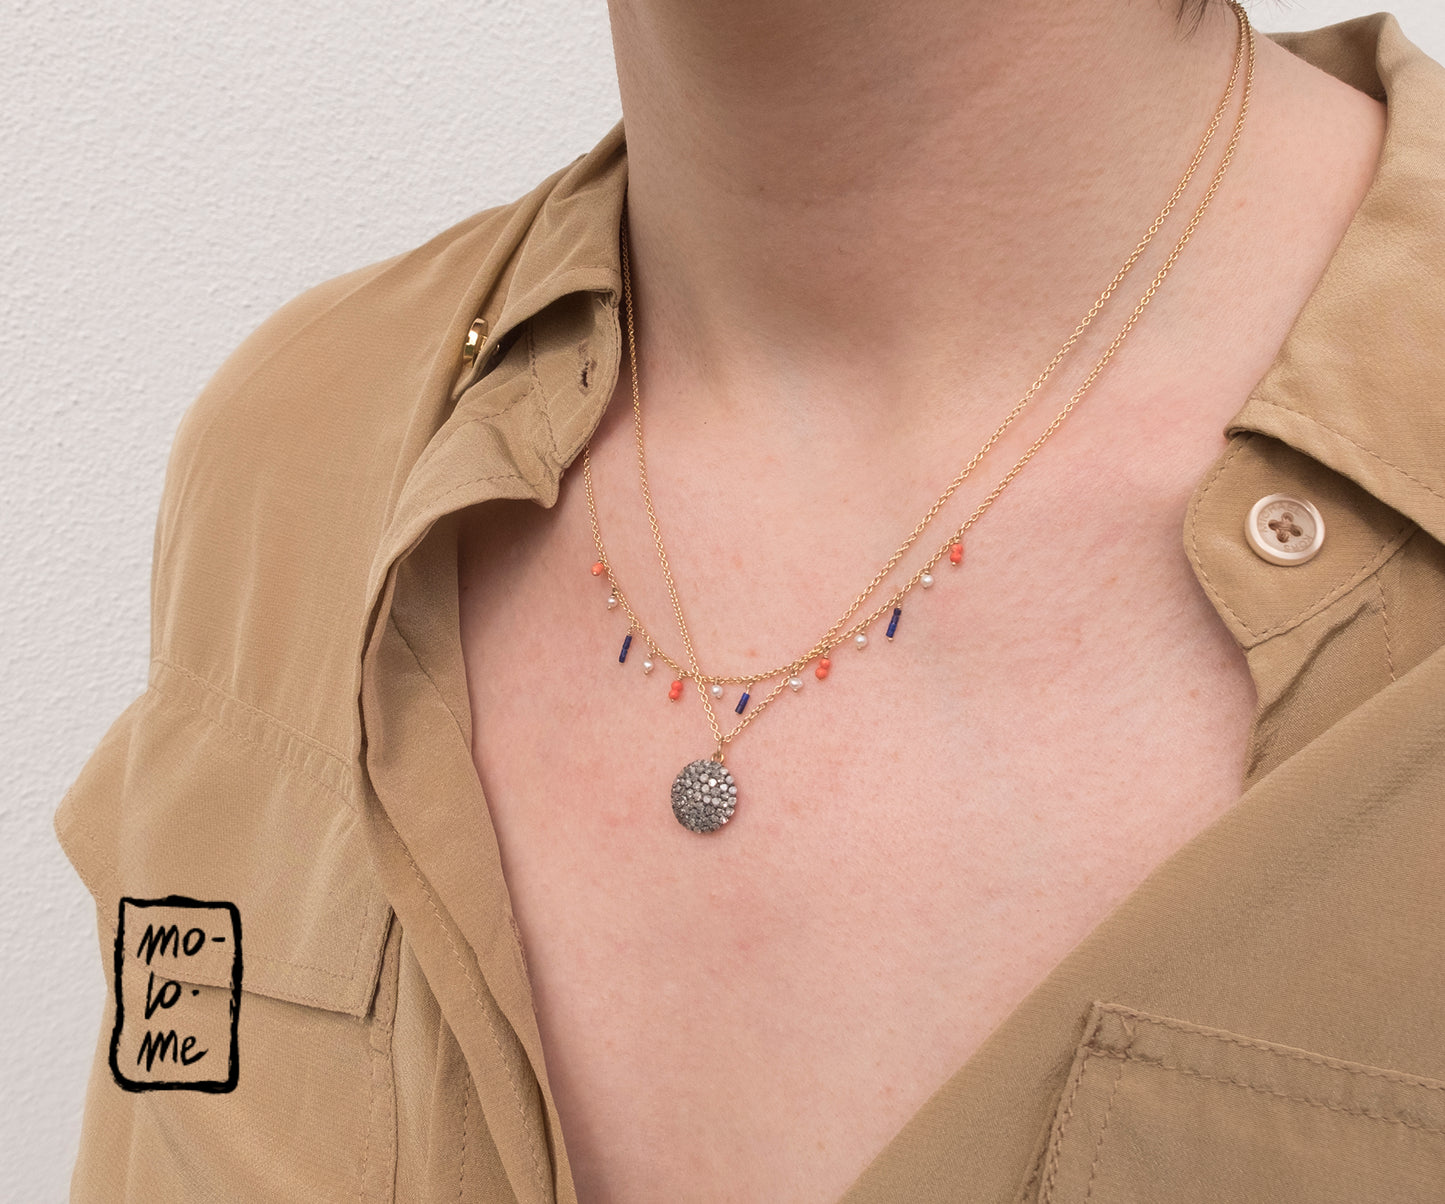 Molo Me Diamond Disc Necklace and Parisian Fringe Necklace on a model